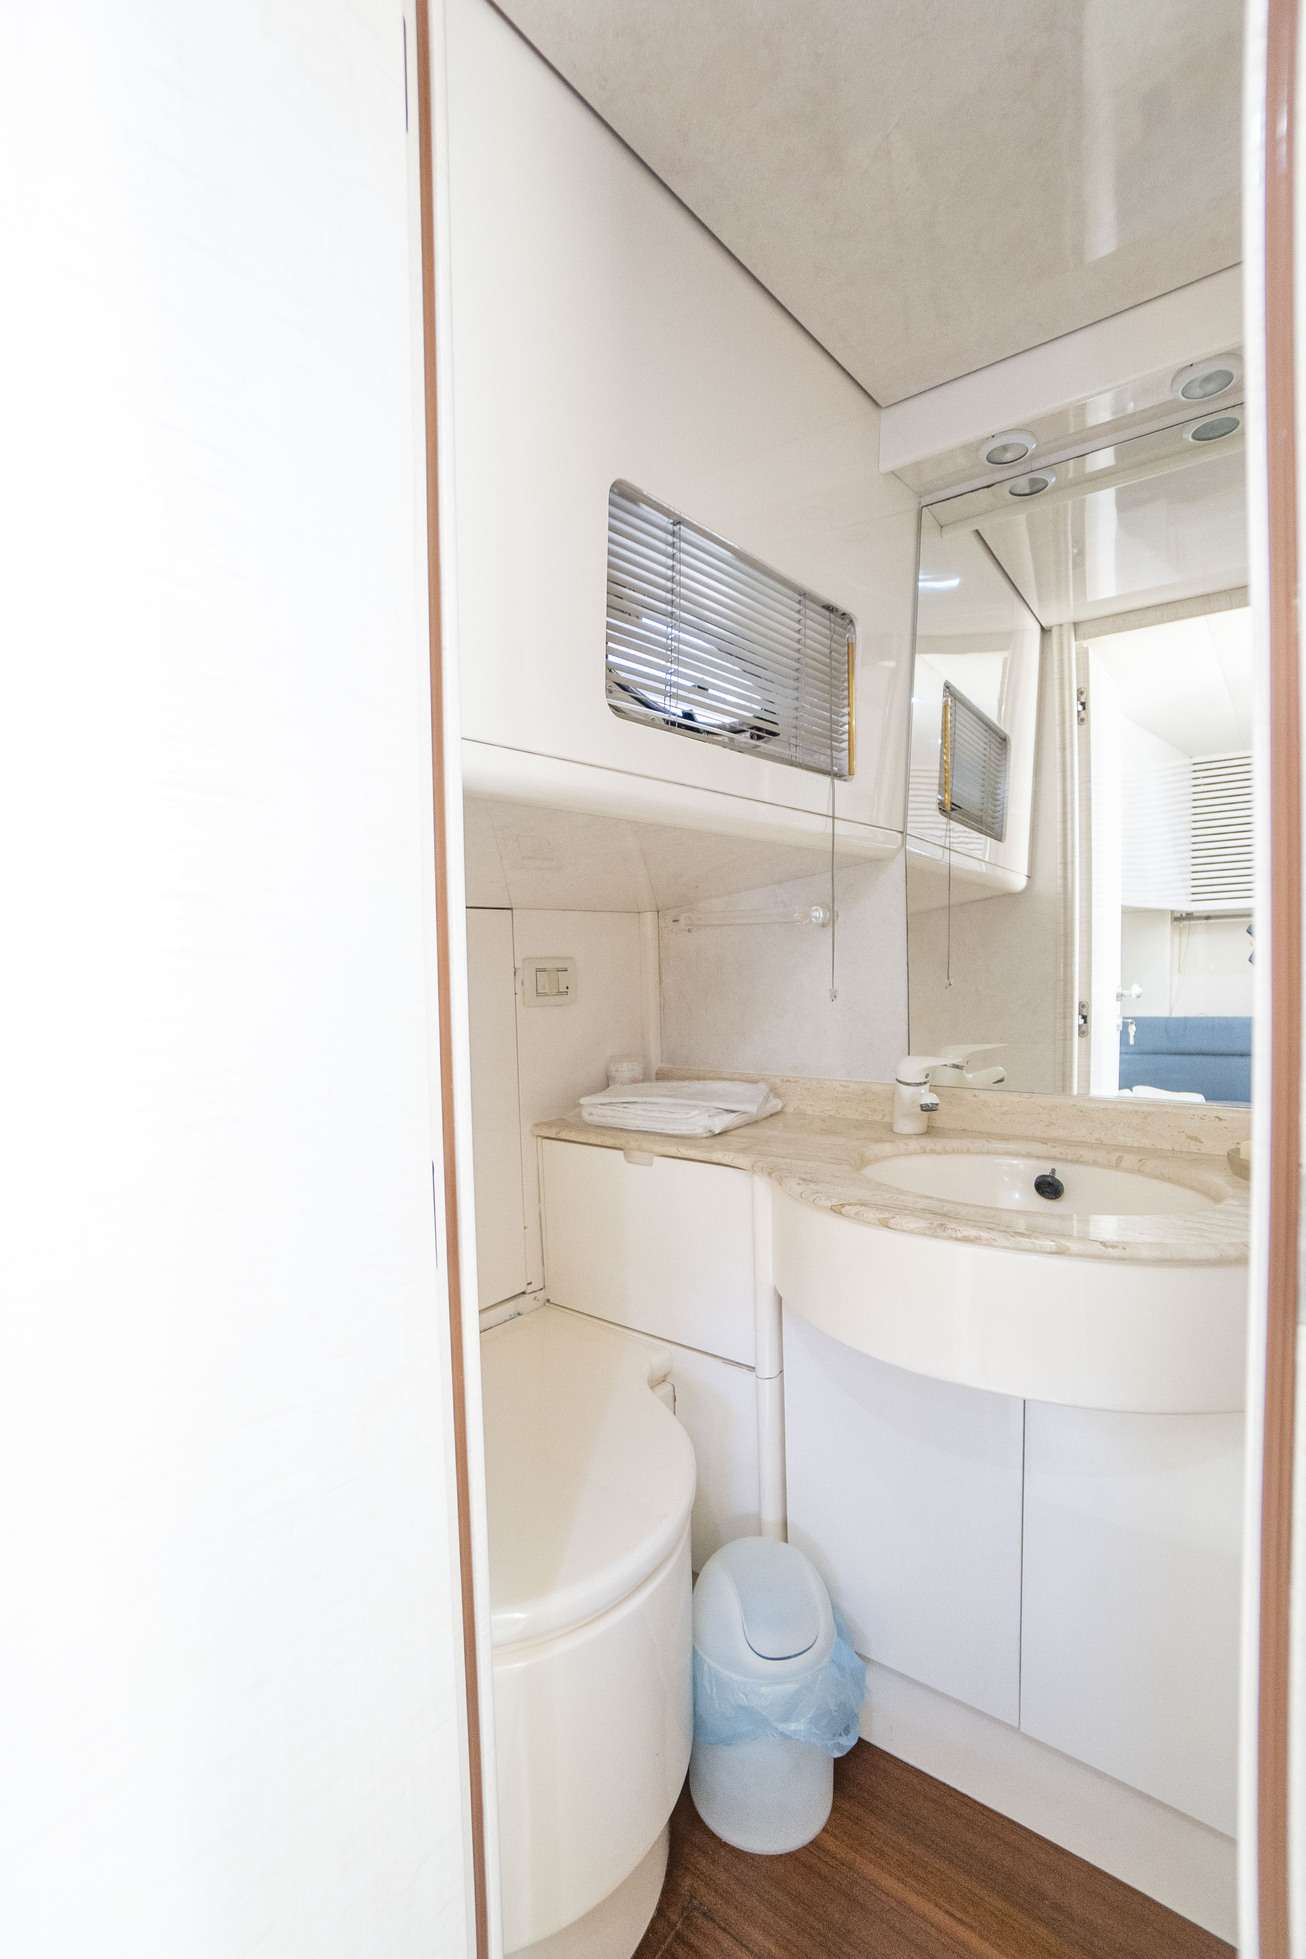 LAKOUPETI Yacht Charter - En suite bathroom